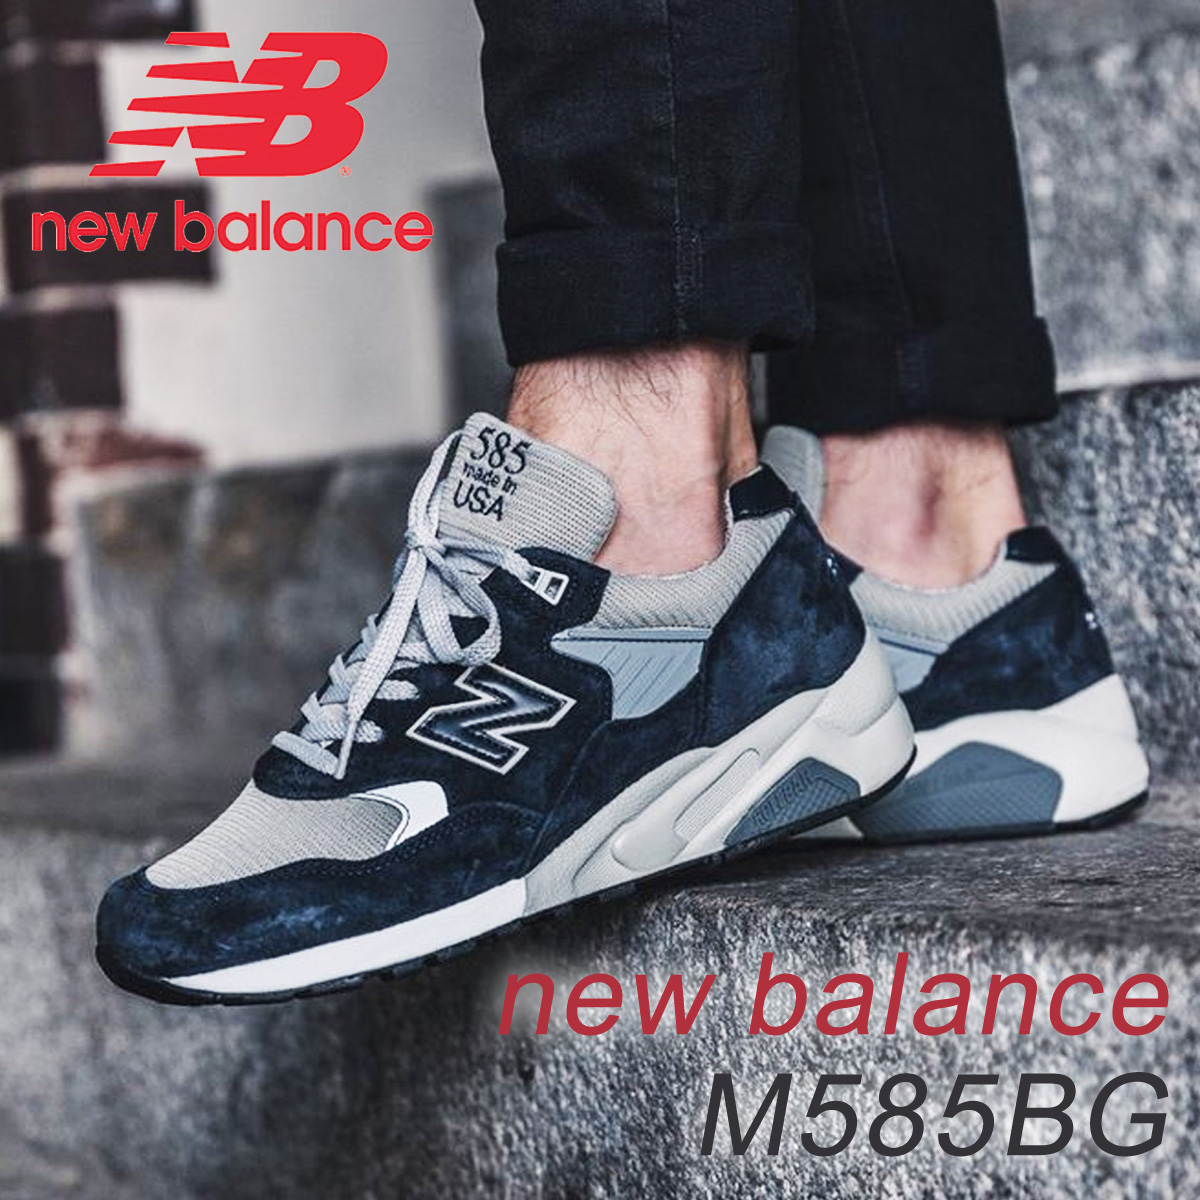 newbalance 585